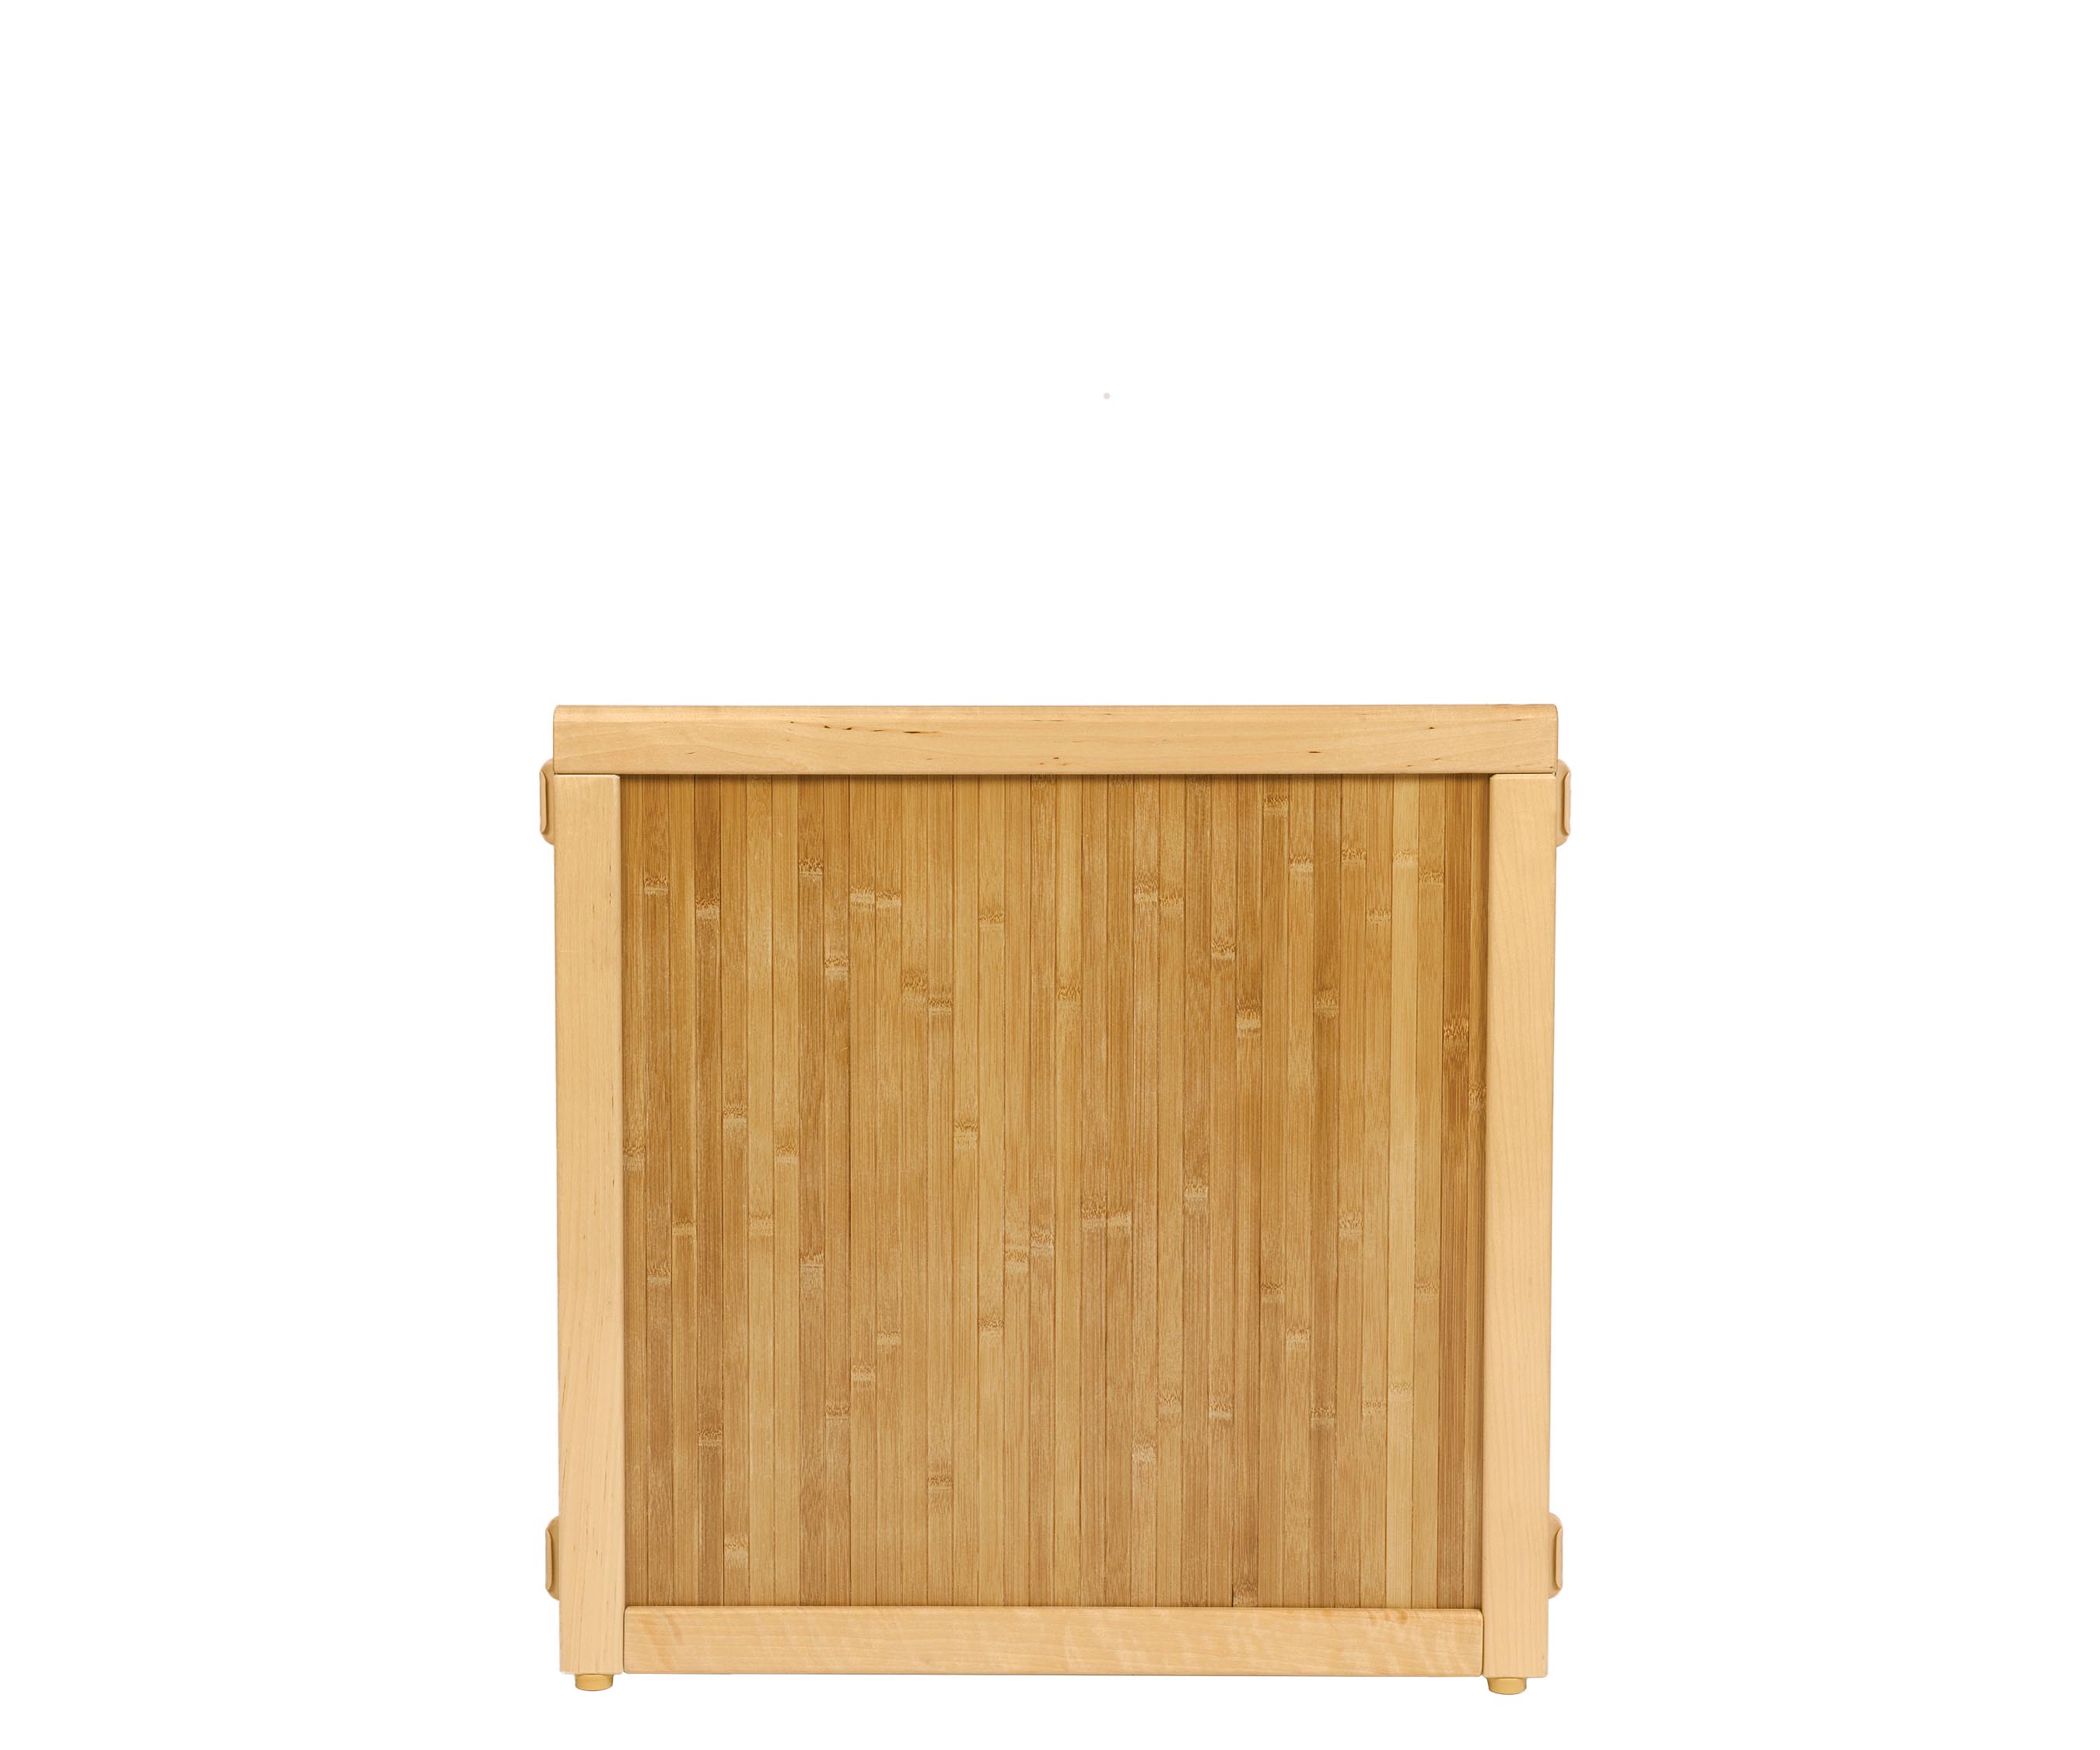 Bamboo panel, 63 x 61 cm